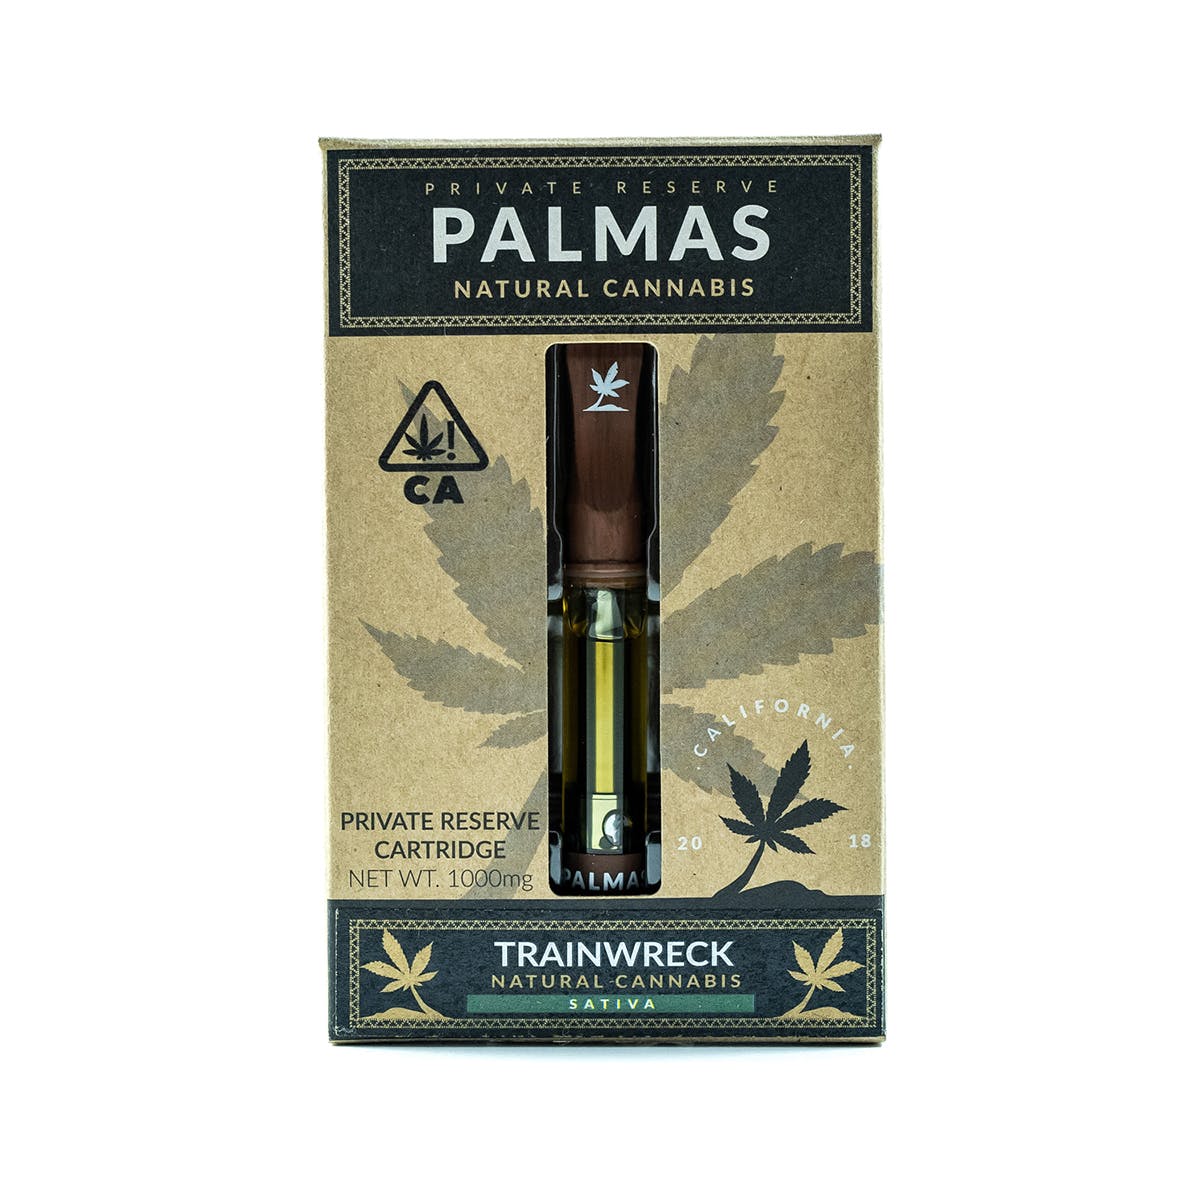 marijuana-dispensaries-straight-up-20-in-compton-palmas-private-reserve-cartridge-trainwreck